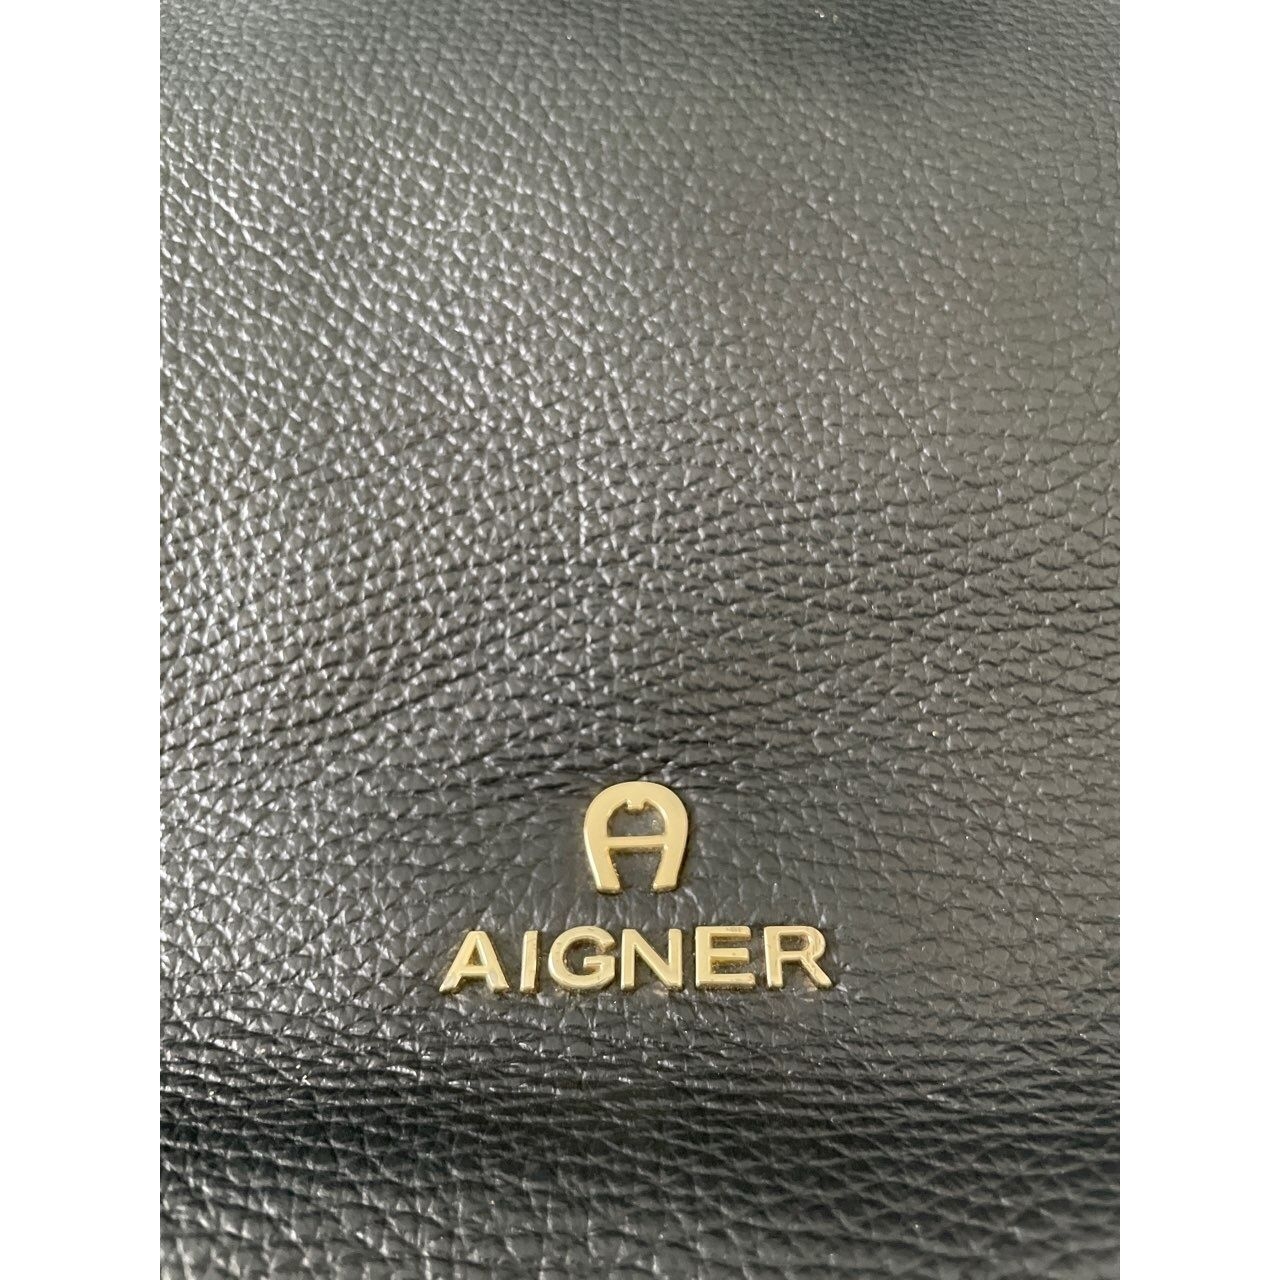 Aigner Milano Shoulder Bag